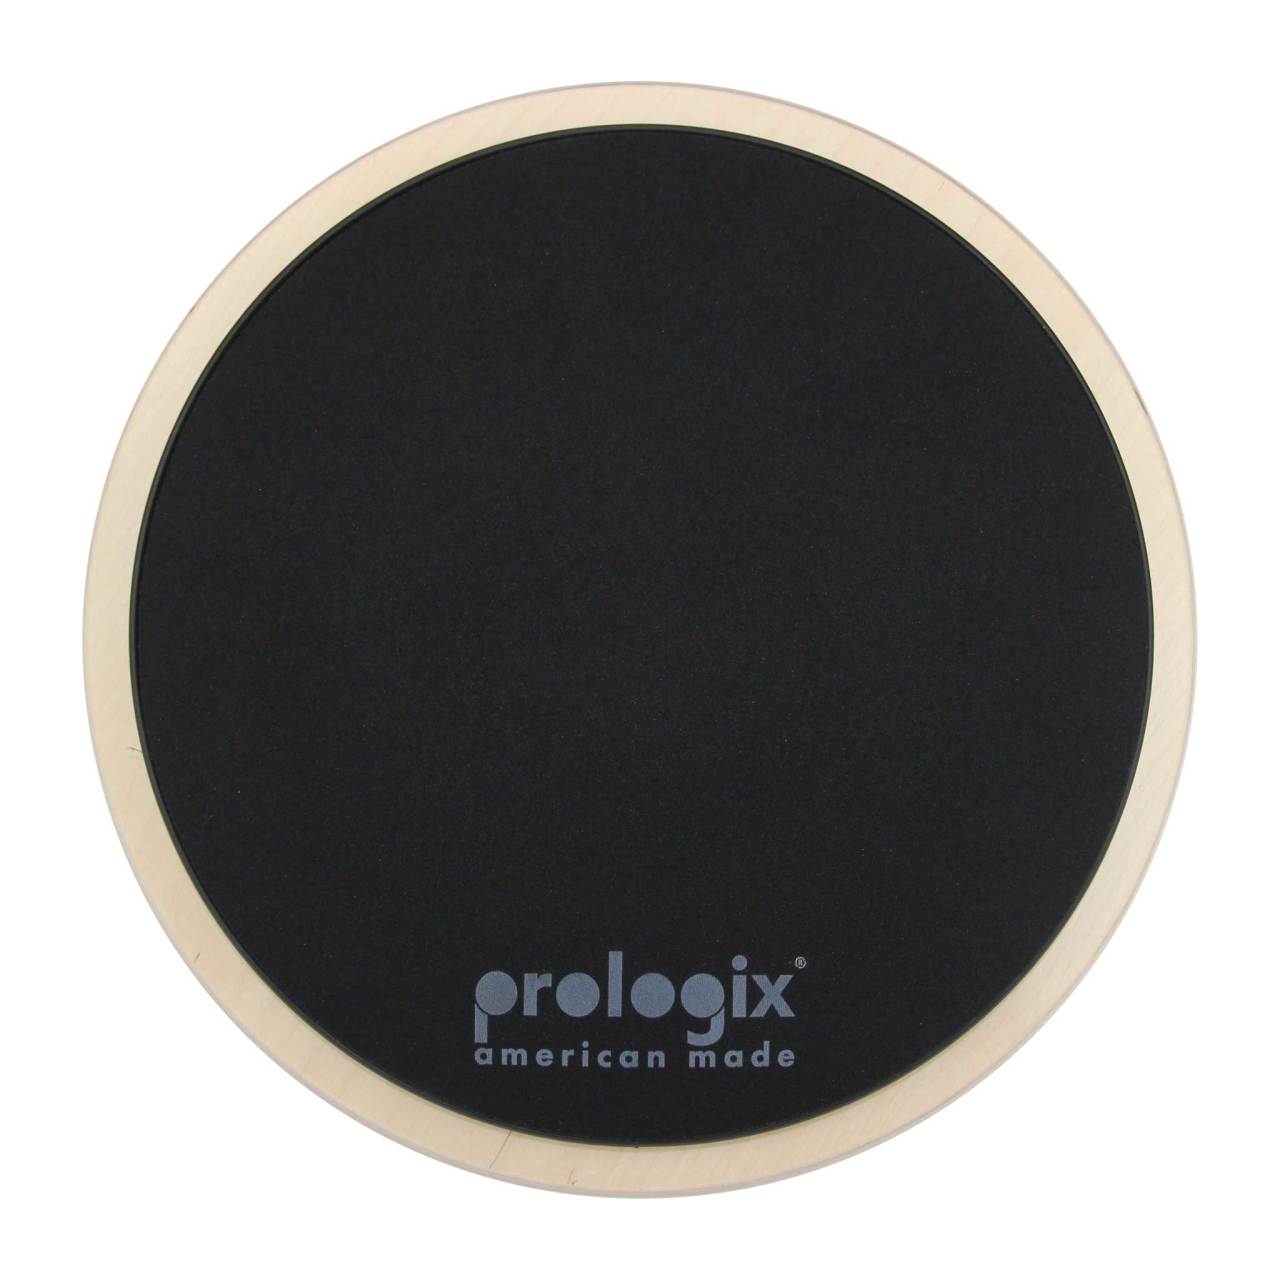 Prologix 6 İnç Blackout Davul Çalışma Pad'i